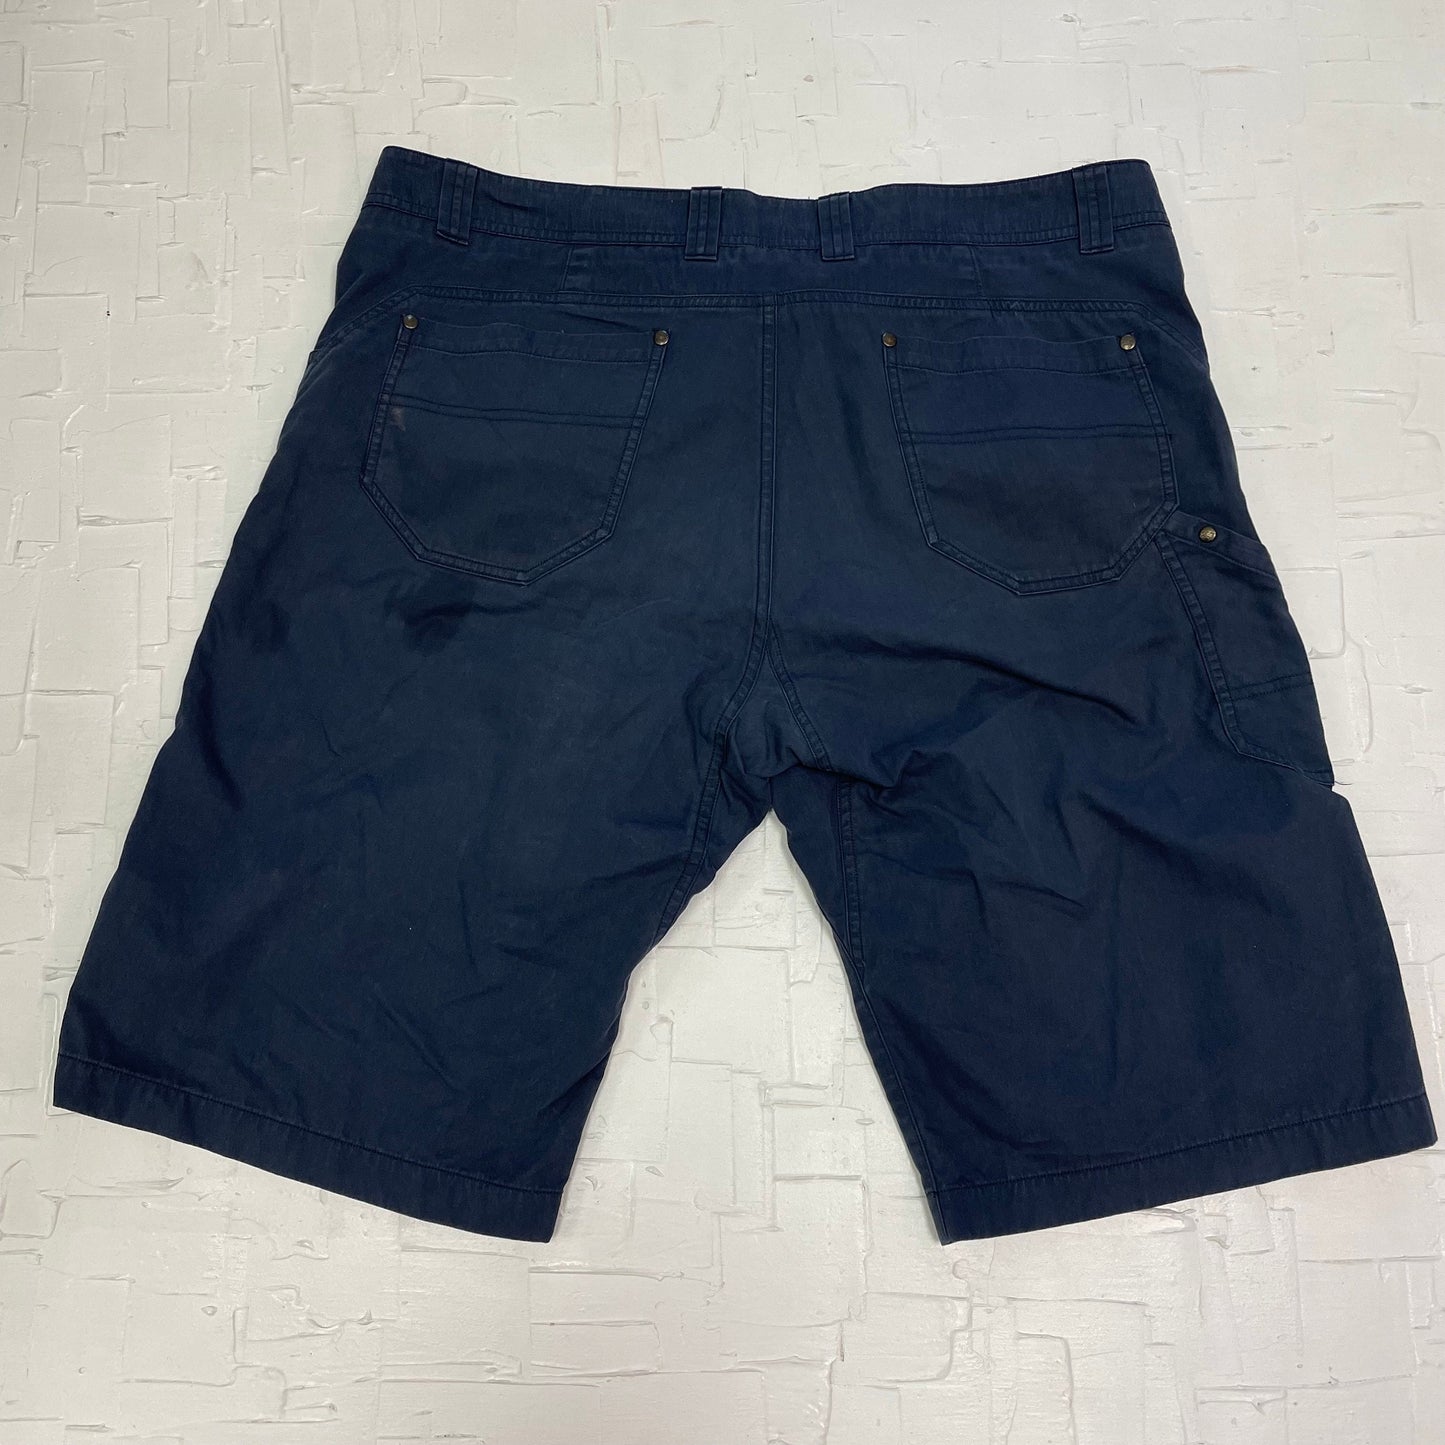 Arc'yterx Navy Blue Relaxed Fit Mens Shorts | Arc'yterx | Sports Wear | Men's Shorts | Summer Shorts | Navy Blue | Waist 38 | SKU: M-1445